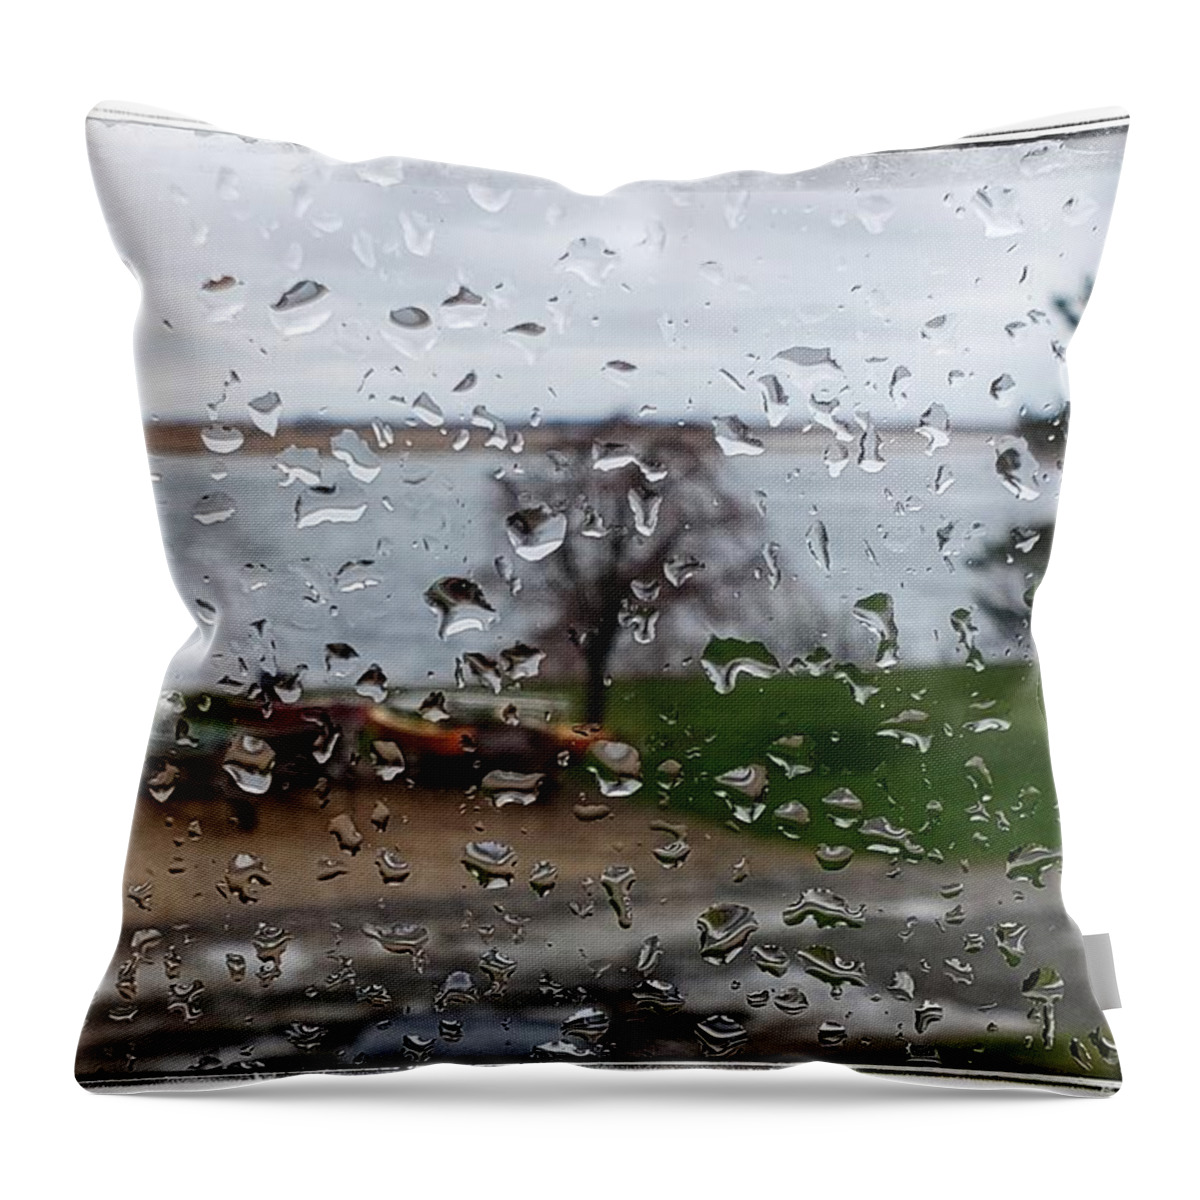  Throw Pillow featuring the photograph Ipswich Rain by Adam Green